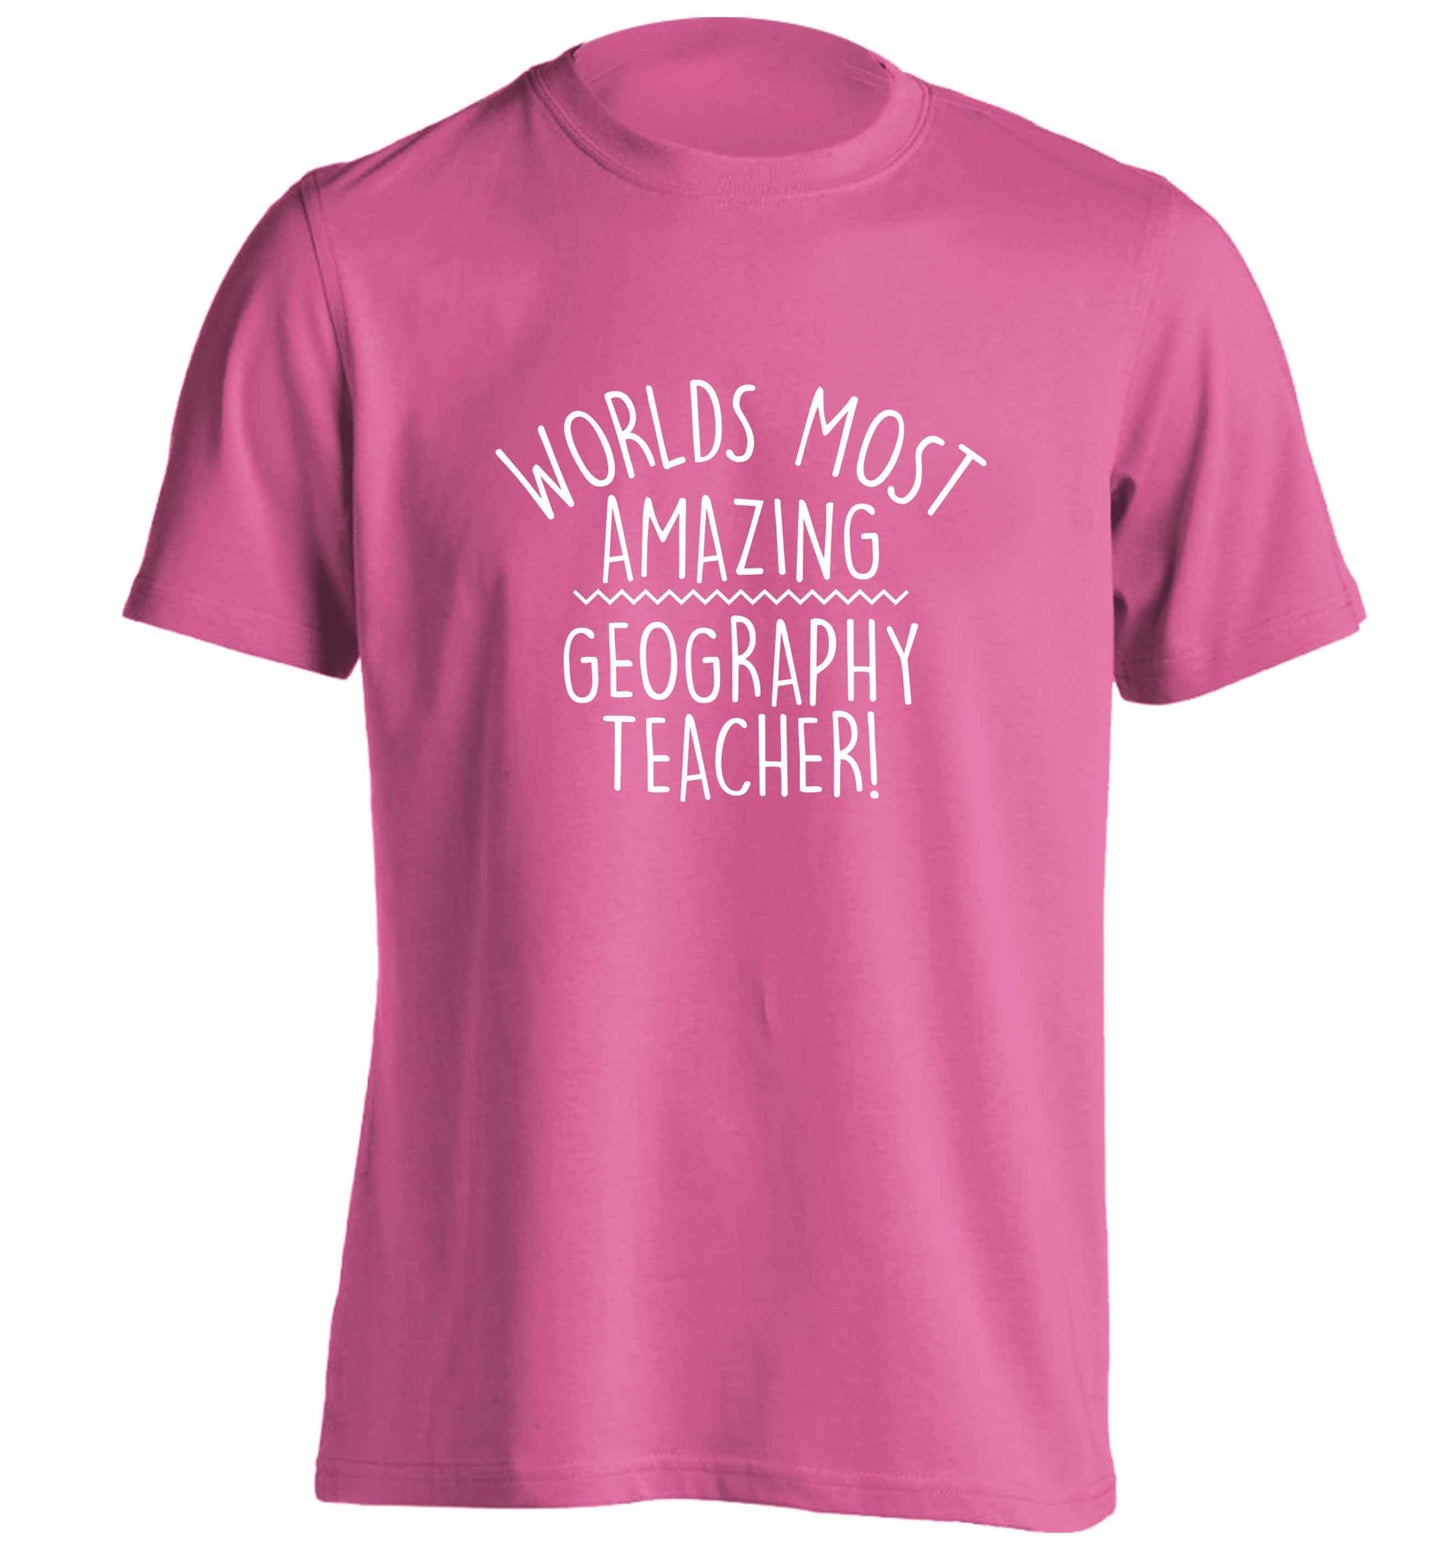 Worlds most amazing geography teacher adults unisex pink Tshirt 2XL